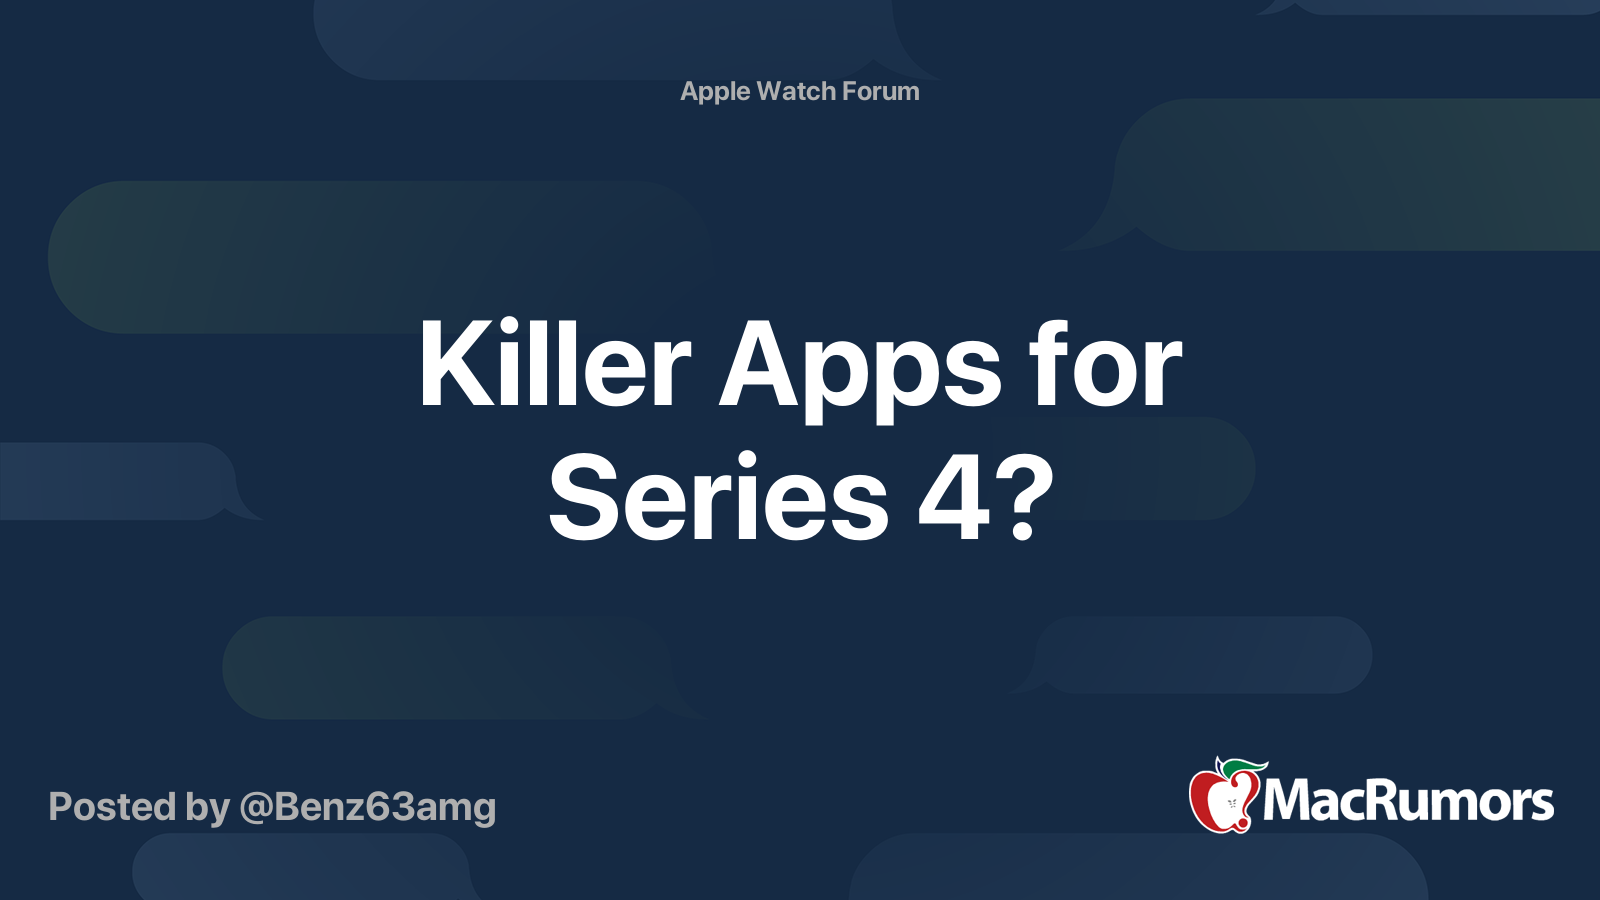 app killer mac